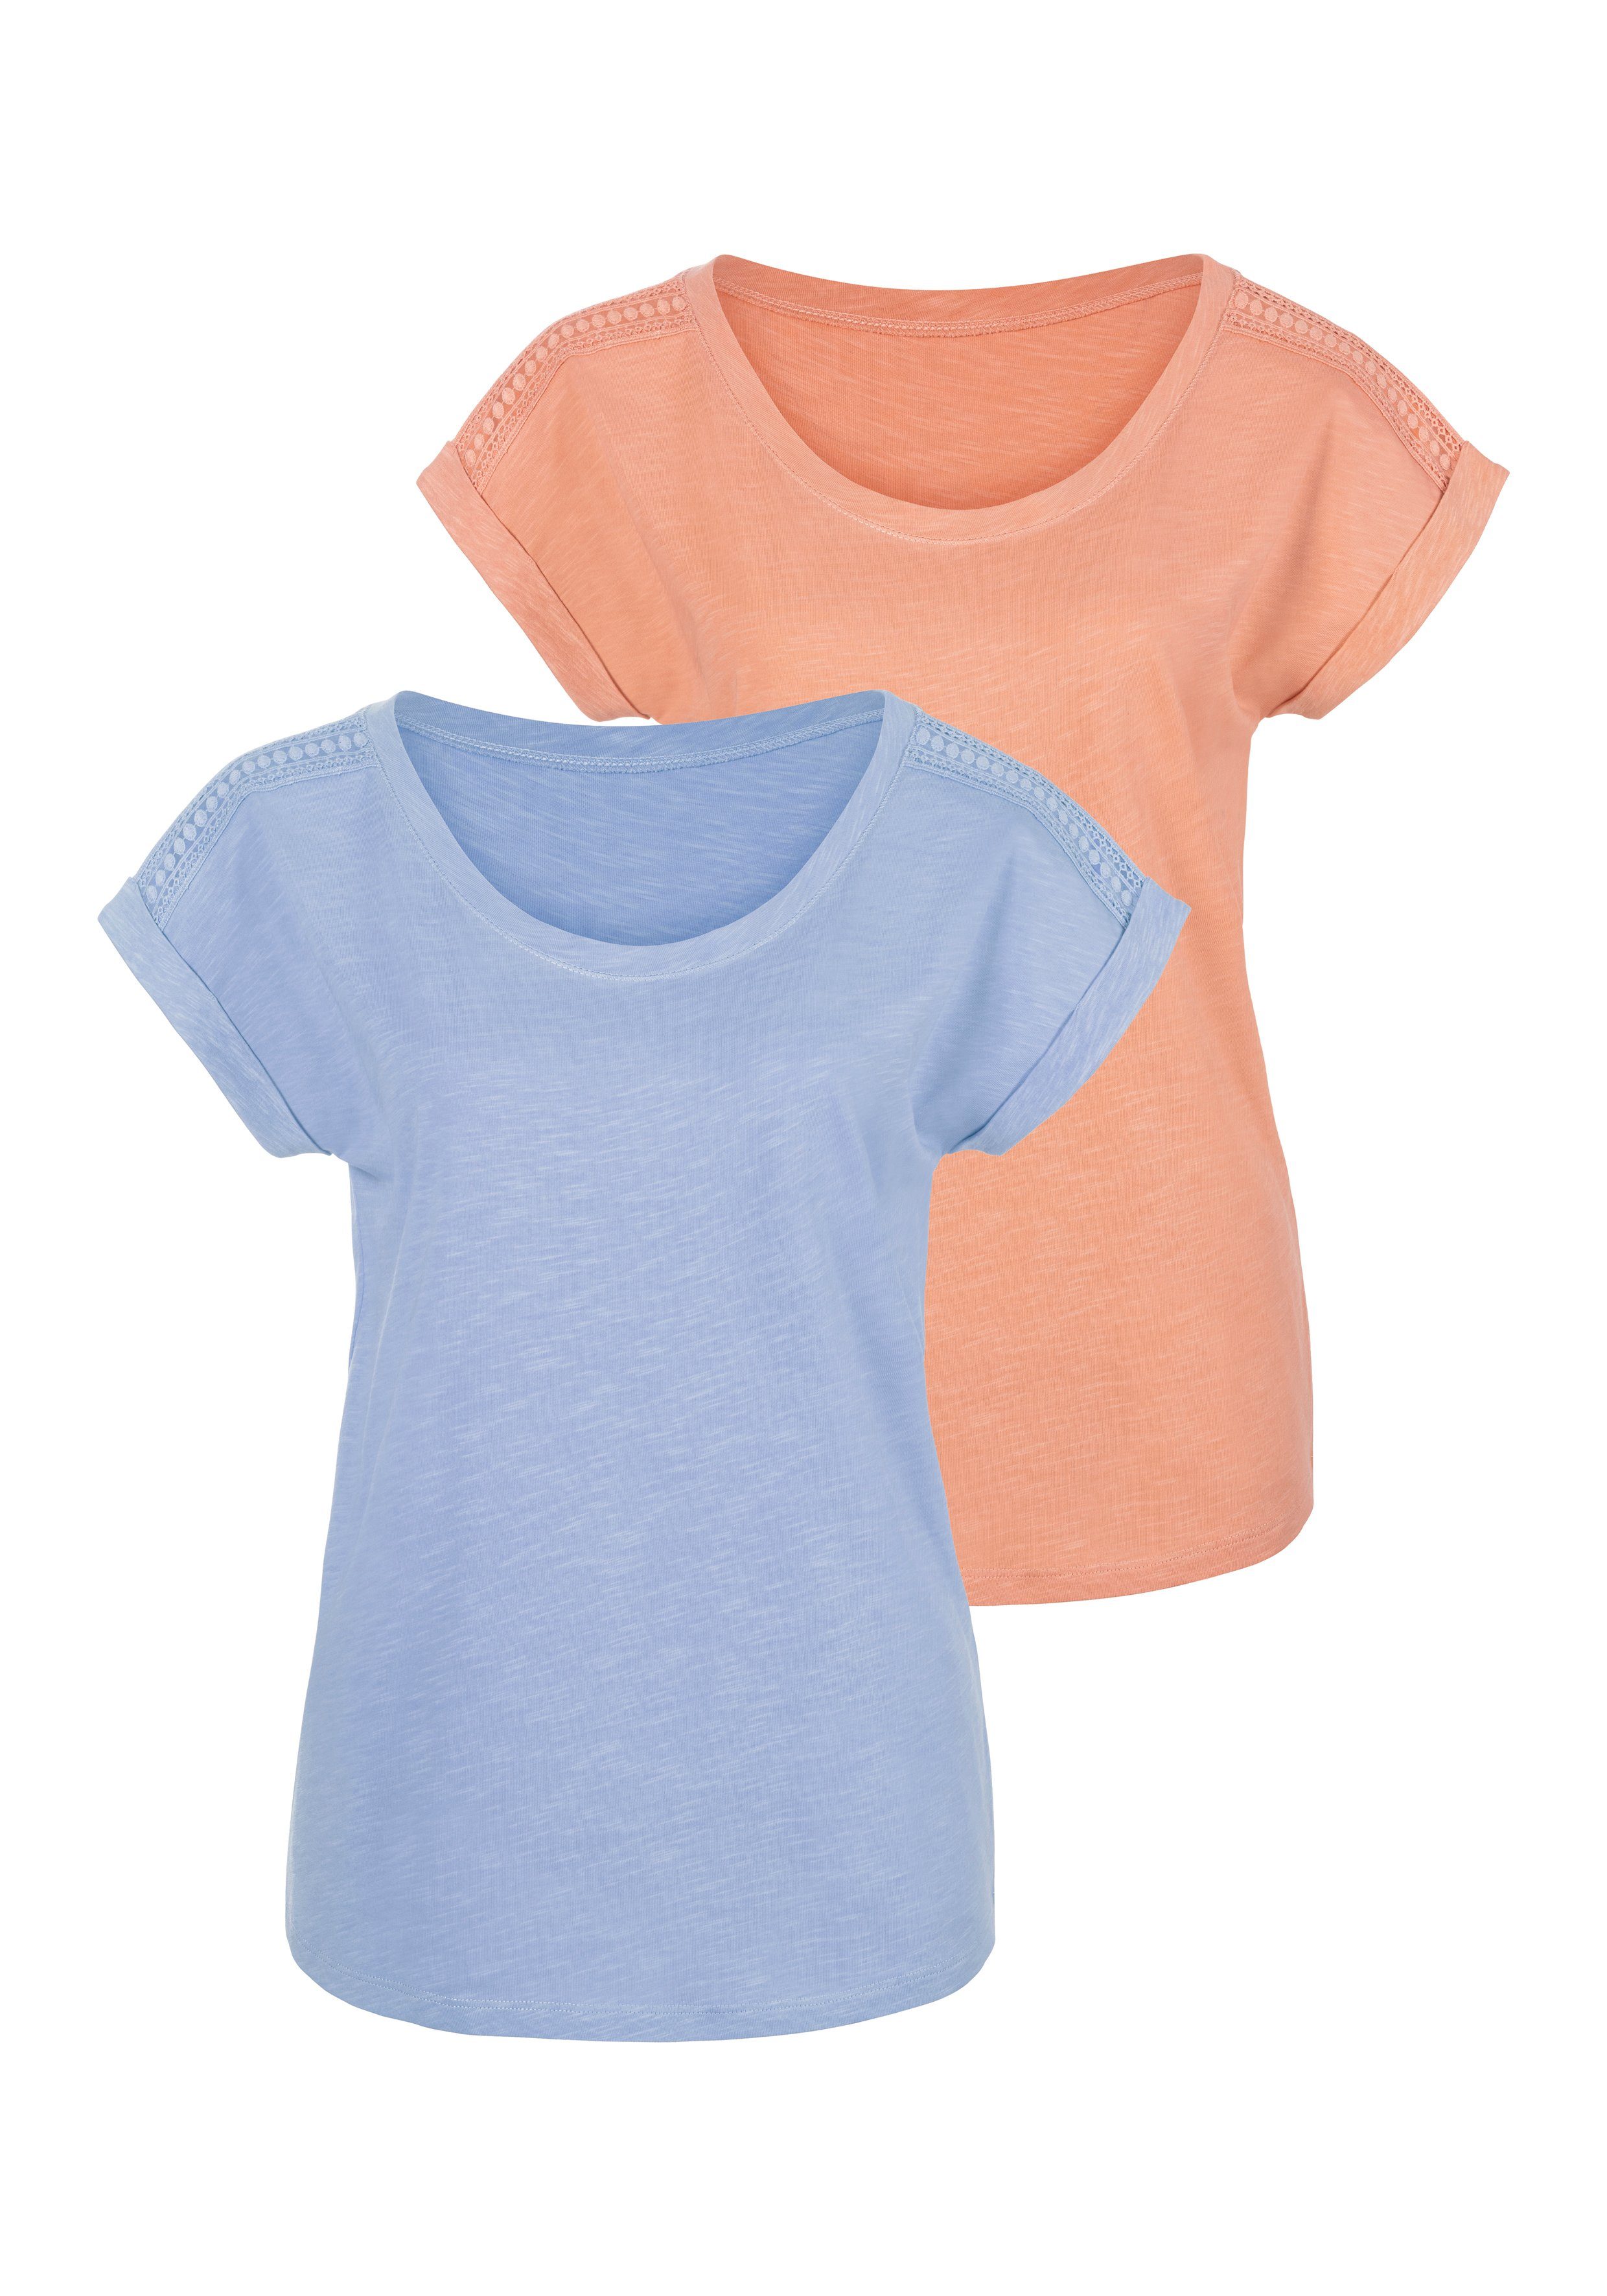 T-Shirt hellblau Häkelspitze mit an 2er-Pack) der (Packung, orange, Schulter Vivance